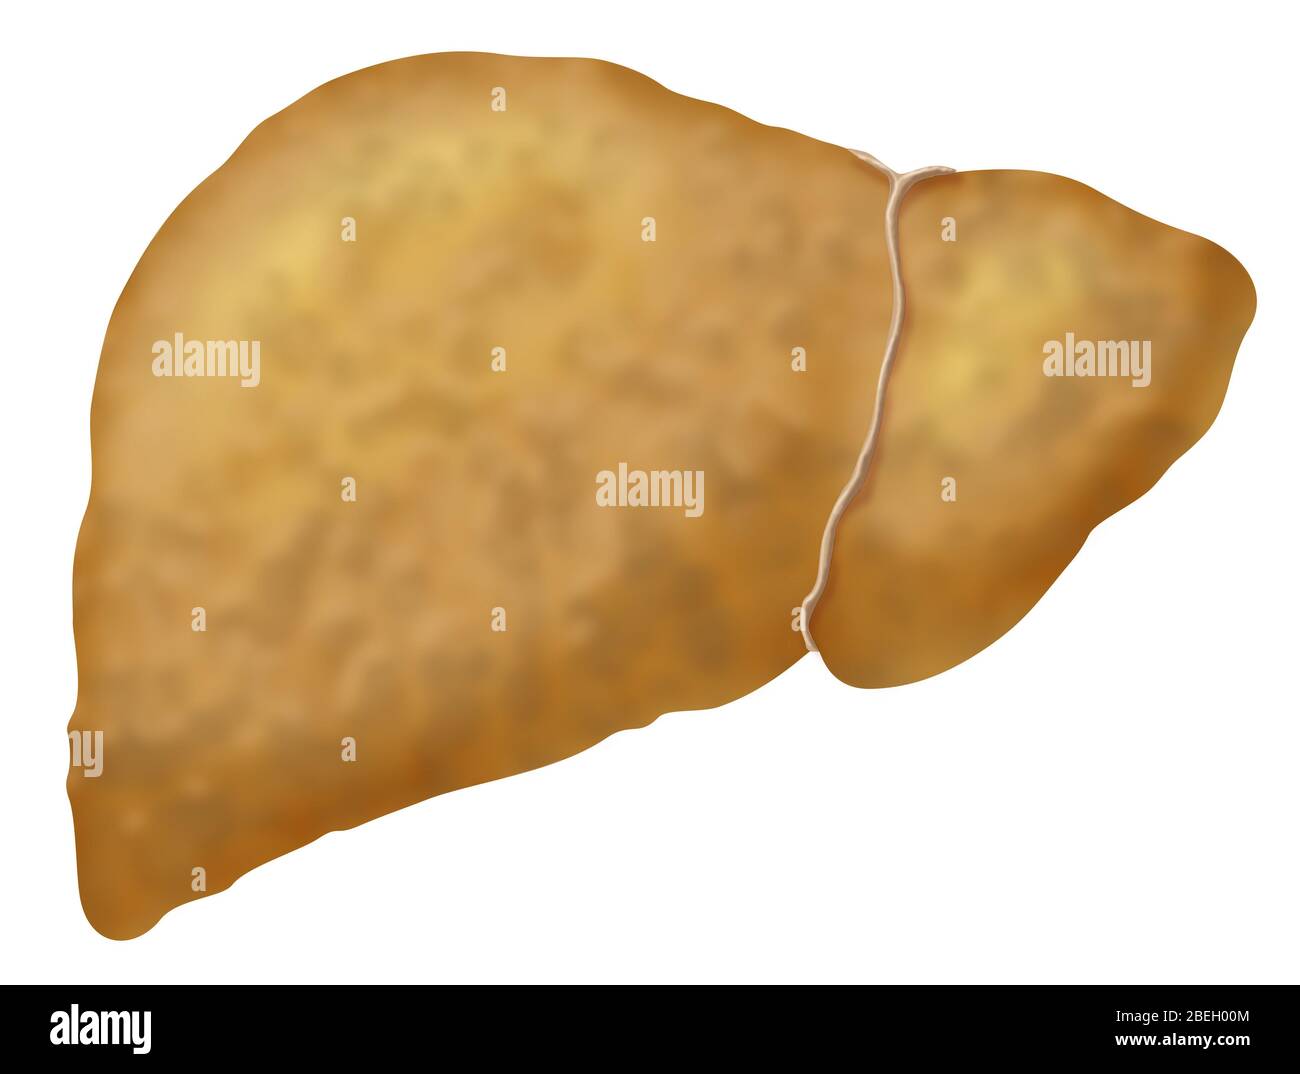 Fatty Liver Disease Stock Photo